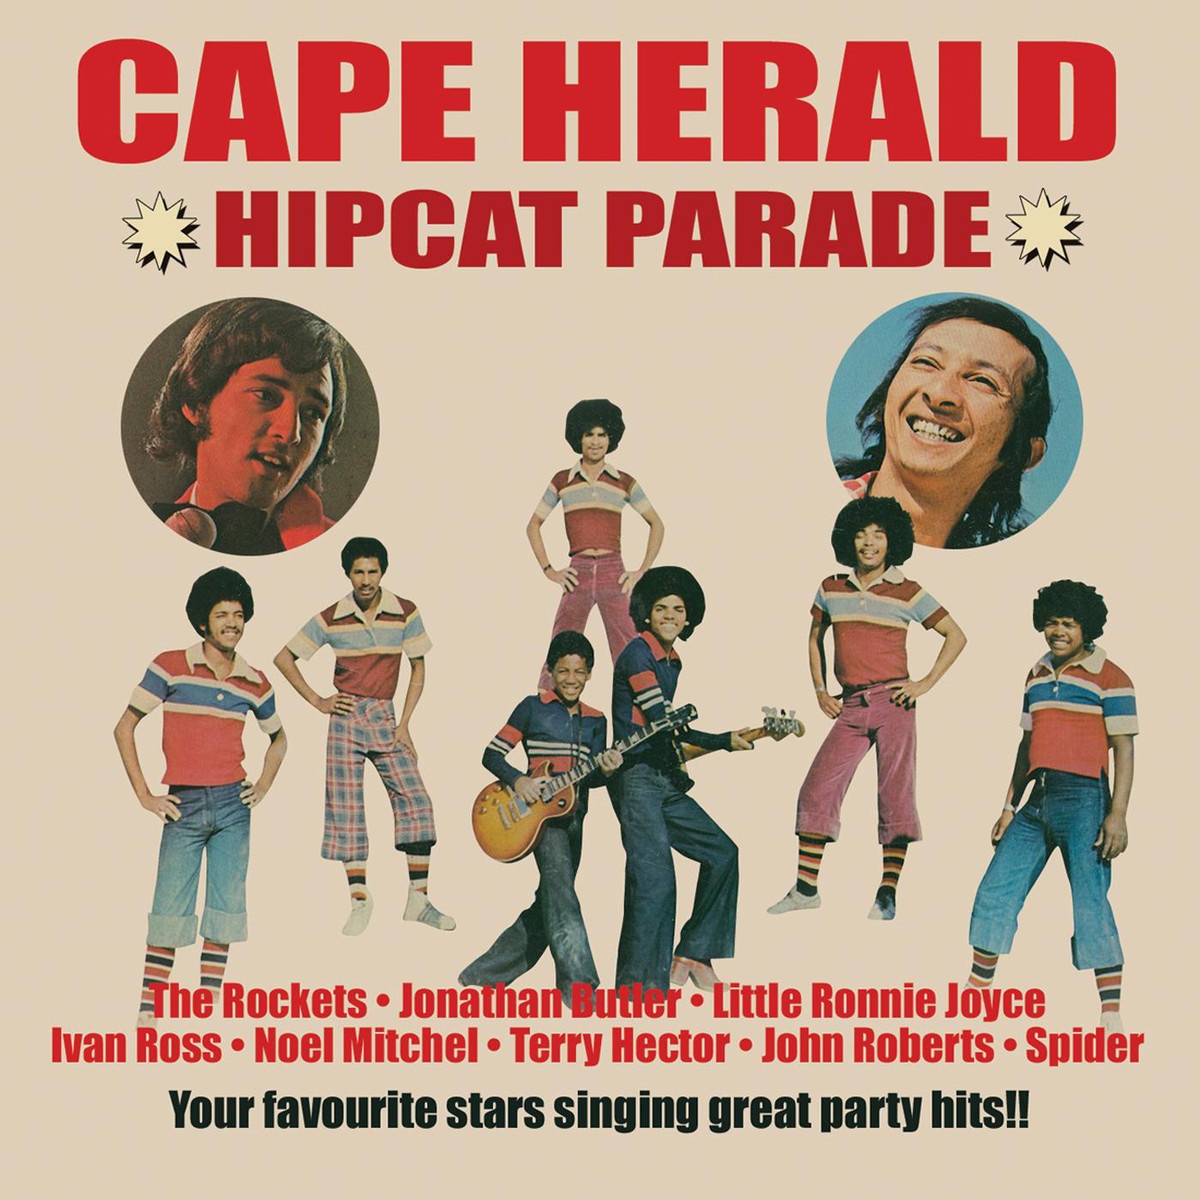 The Cape Herald Hipcats Parade